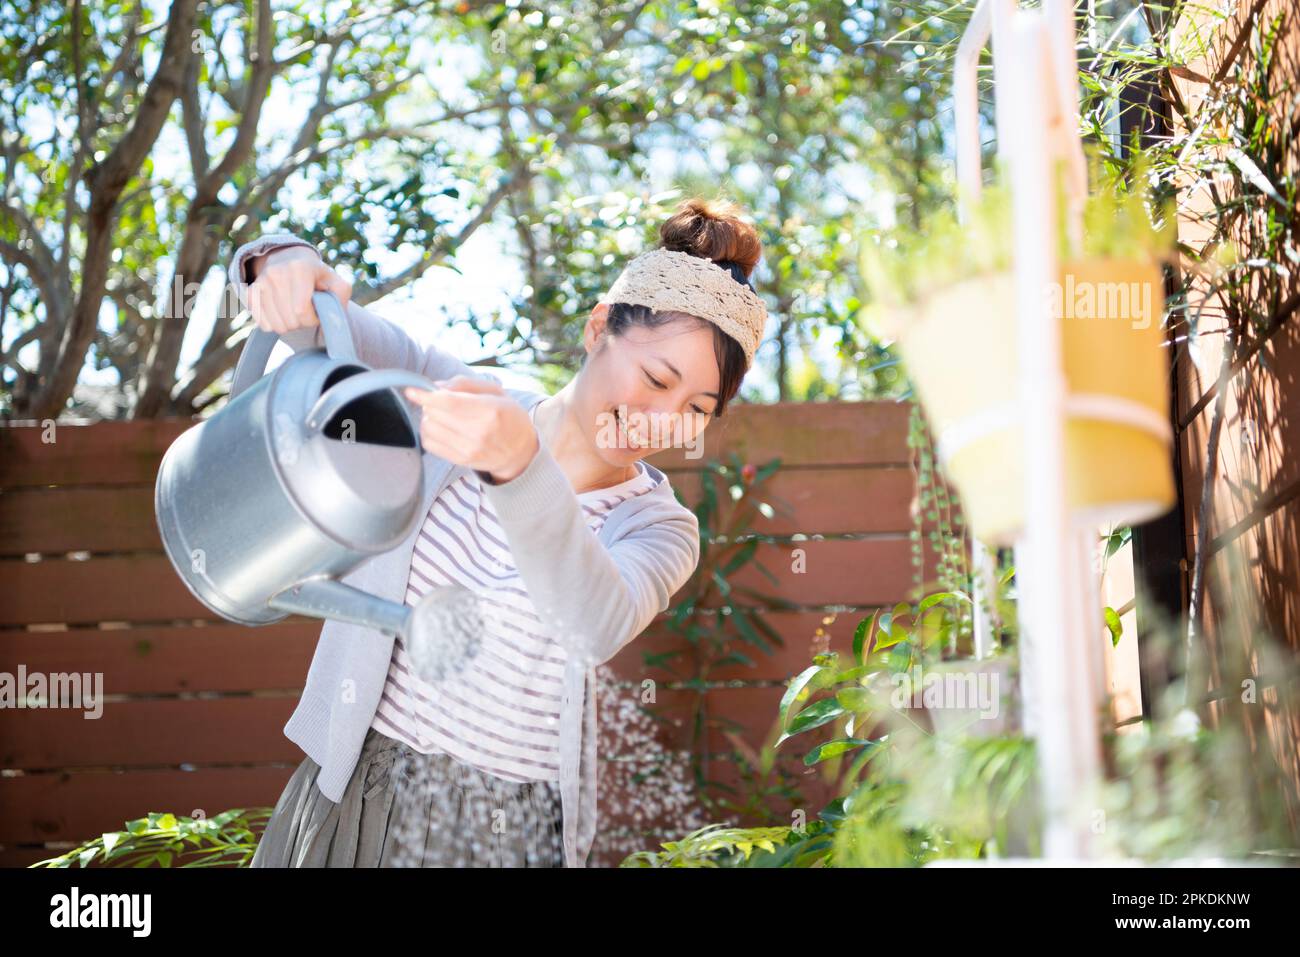 Woman watering plants in garden Banque D'Images